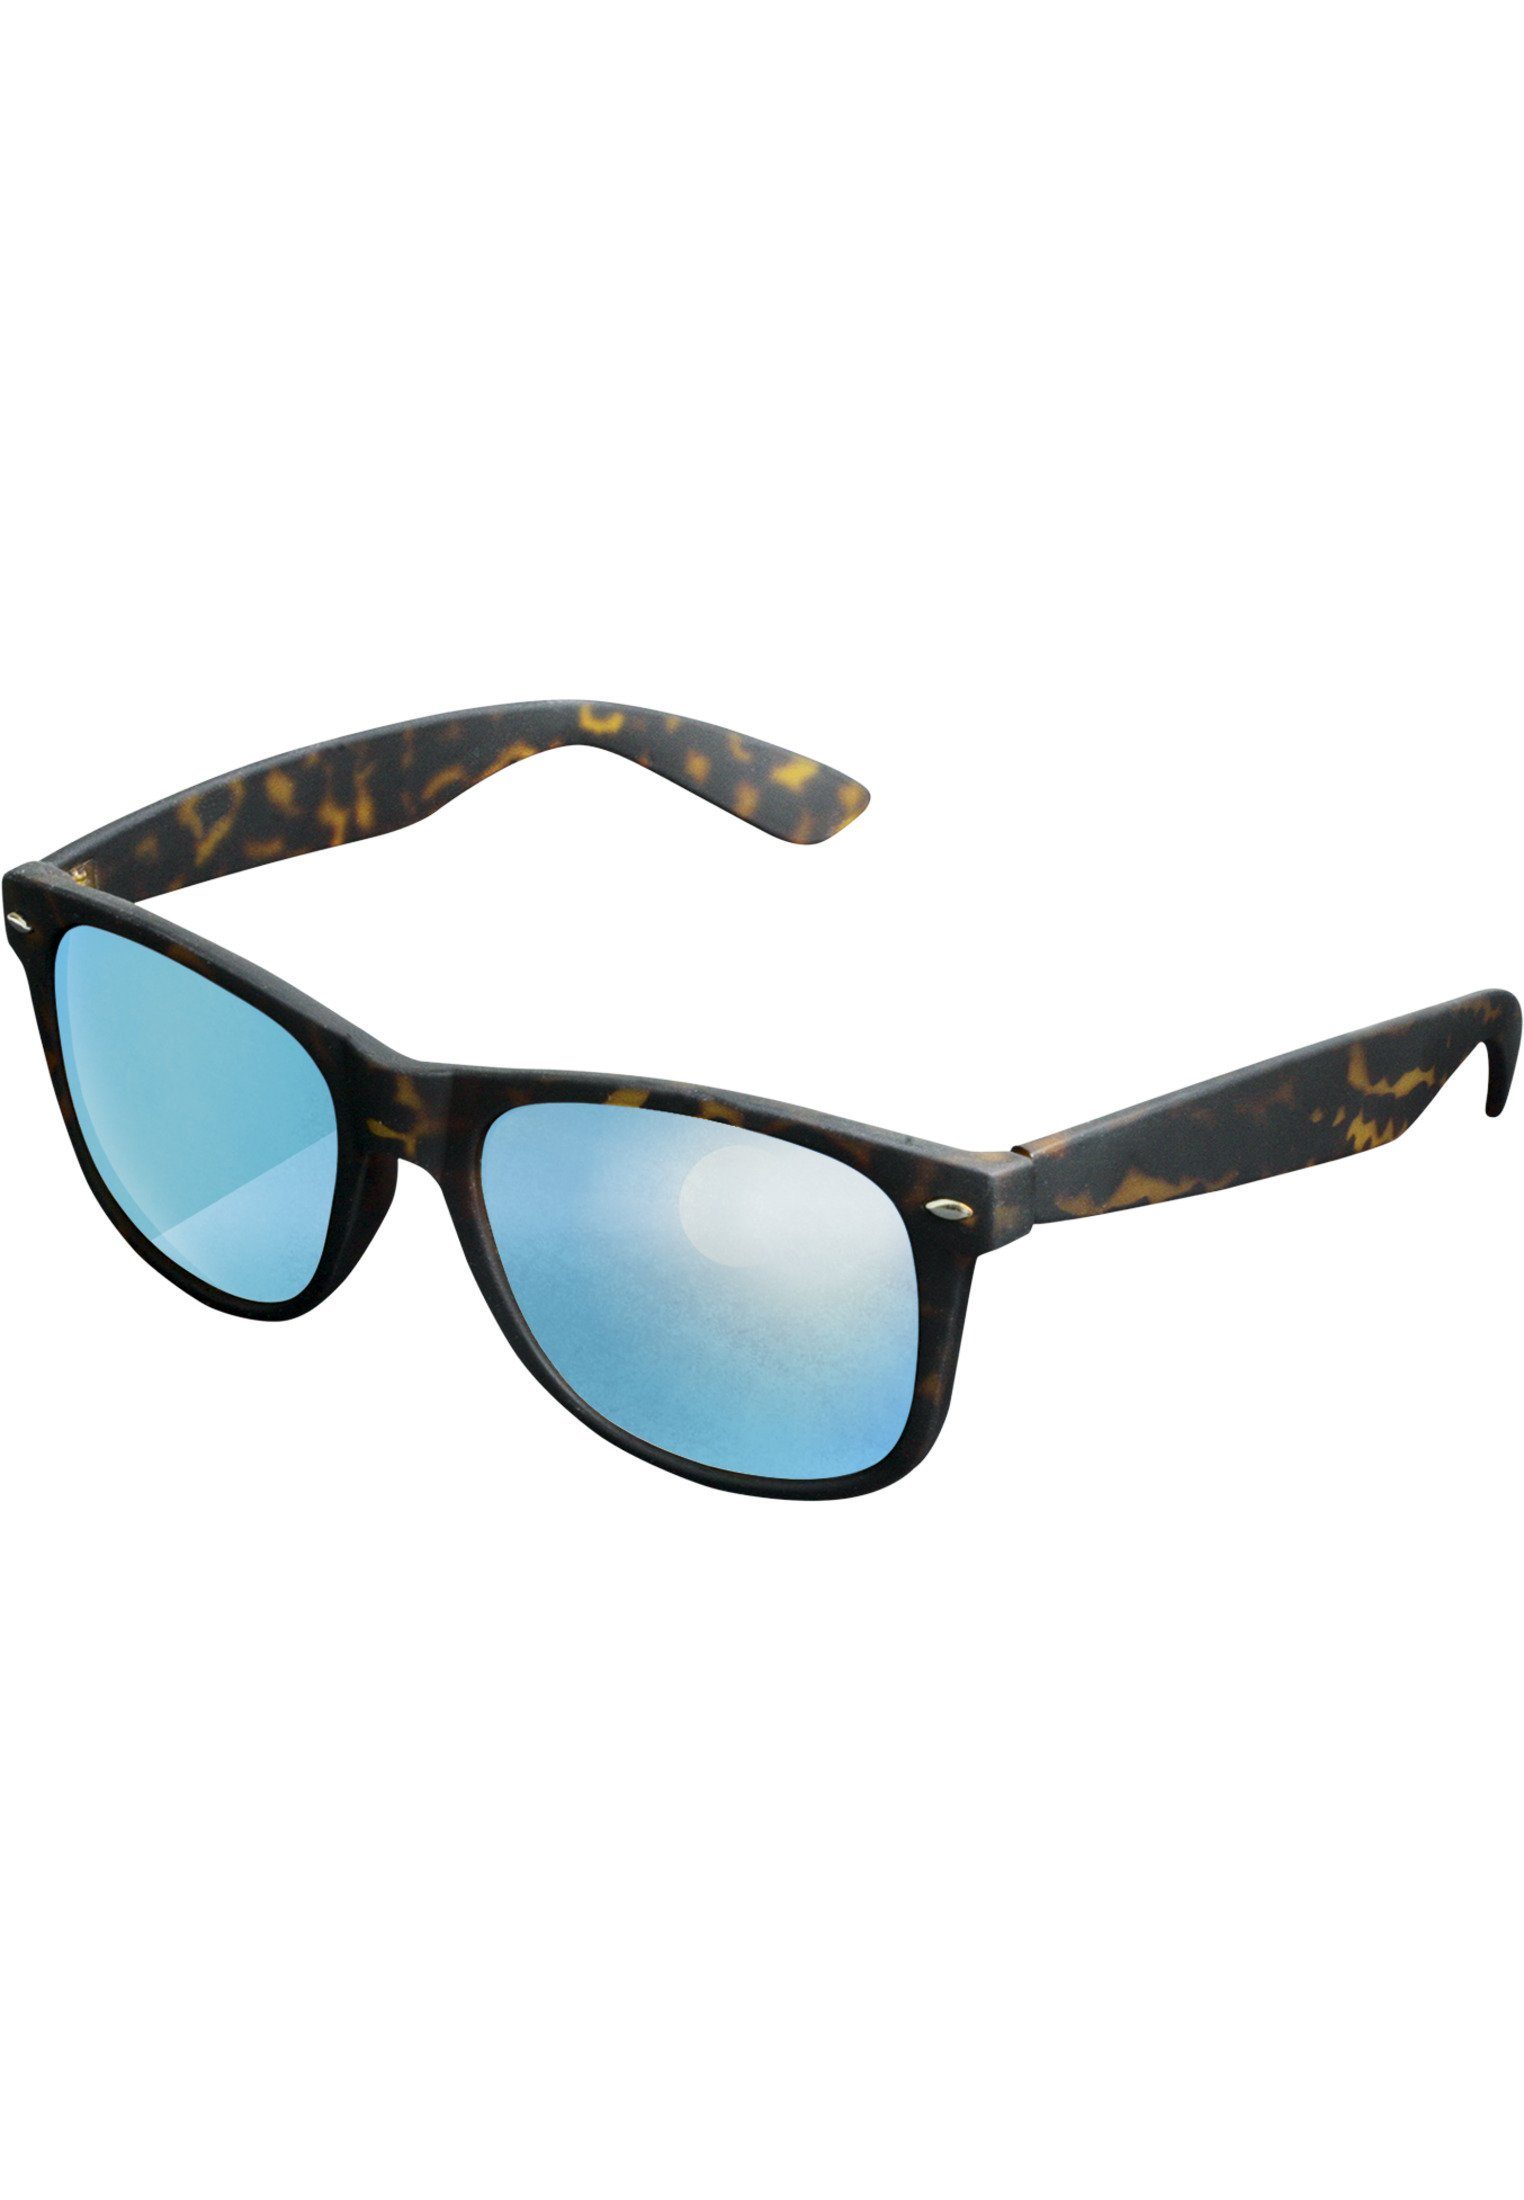 MSTRDS Sonnenbrille Accessoires Mirror amber/blue Sunglasses Likoma